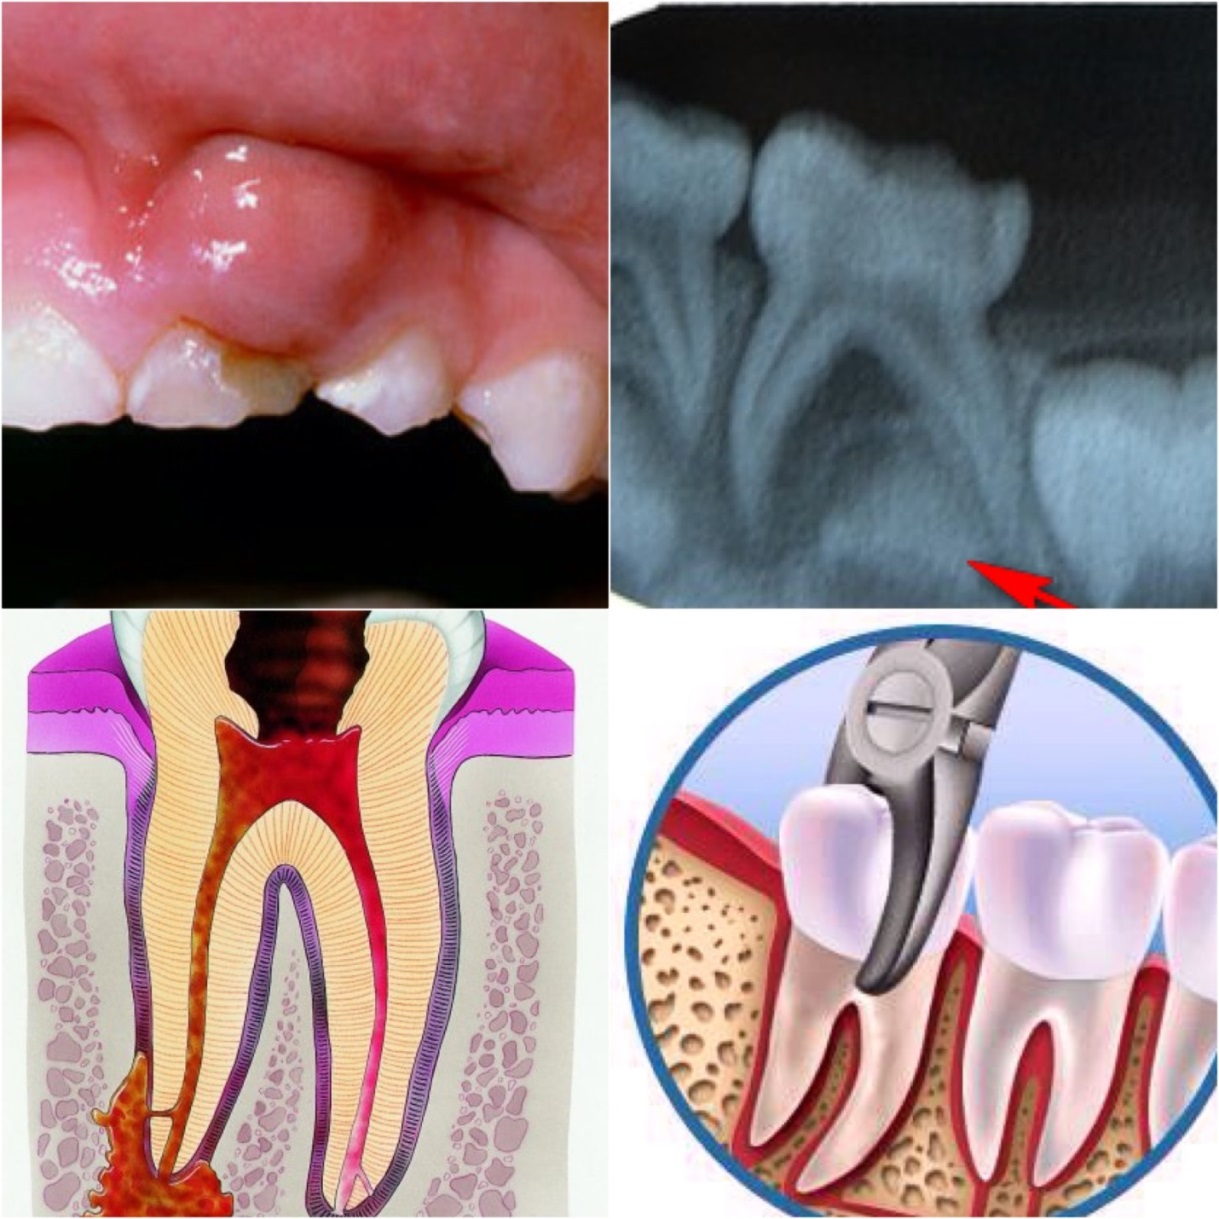 Лечение пульпита и периодонтита молочного зуба thumbnail